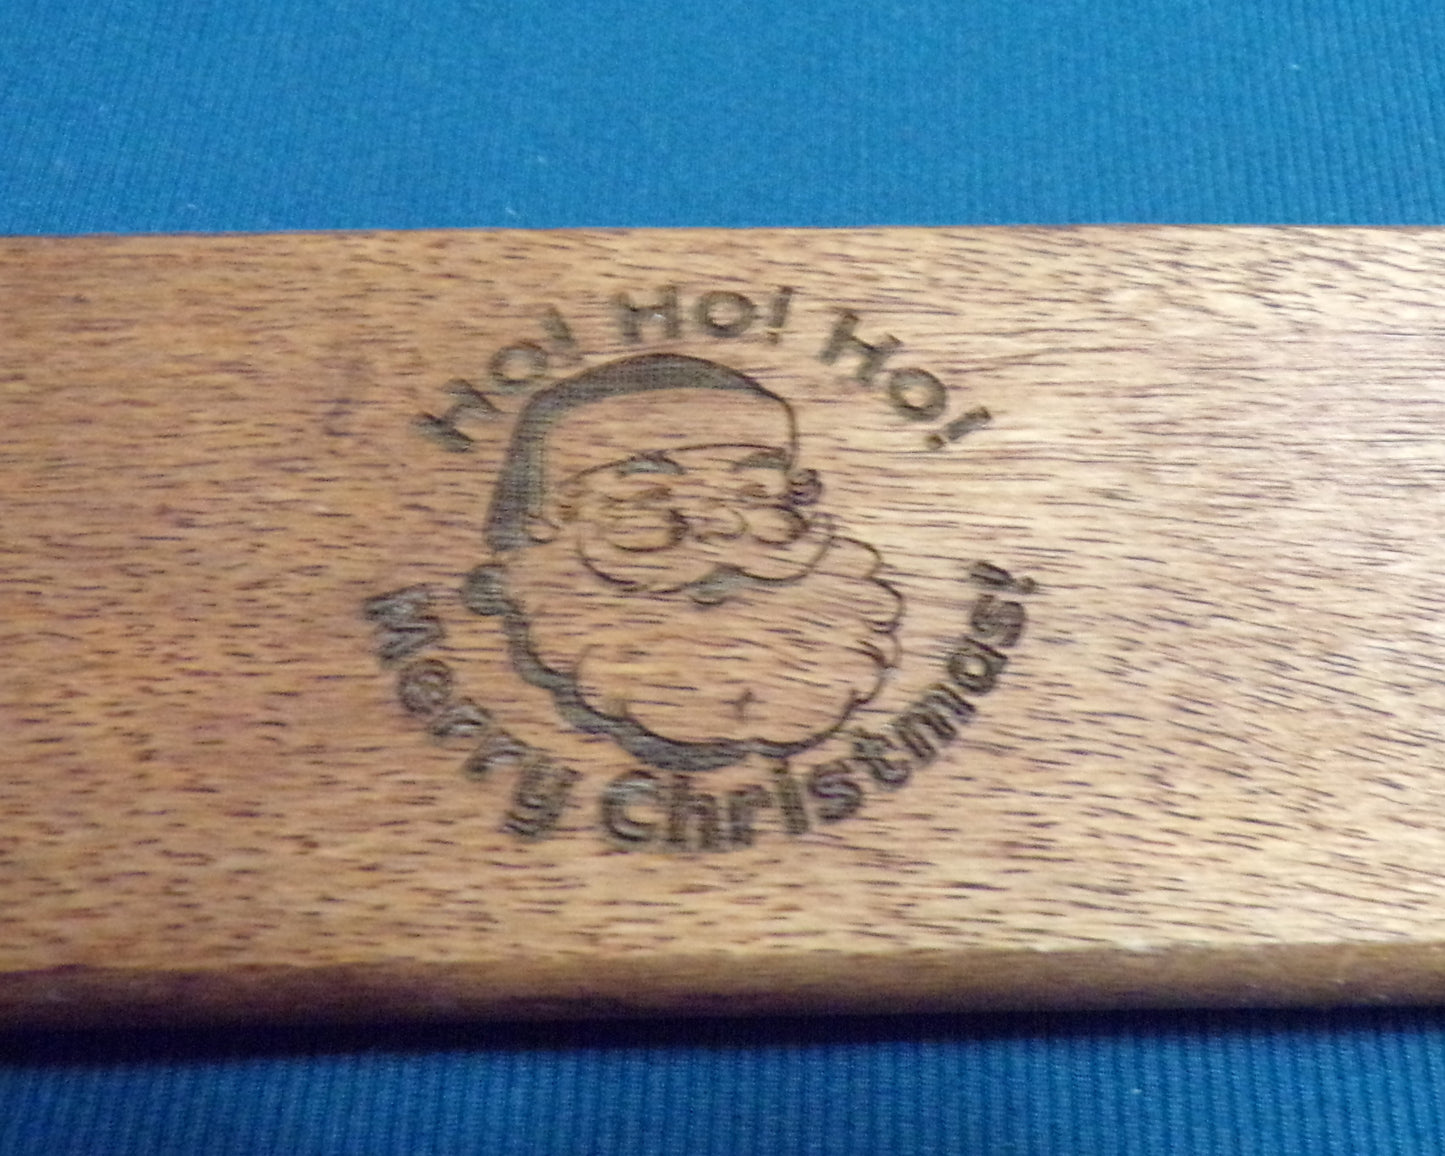 Acacia wood Cutting/Charcuterie board engraved with Santa